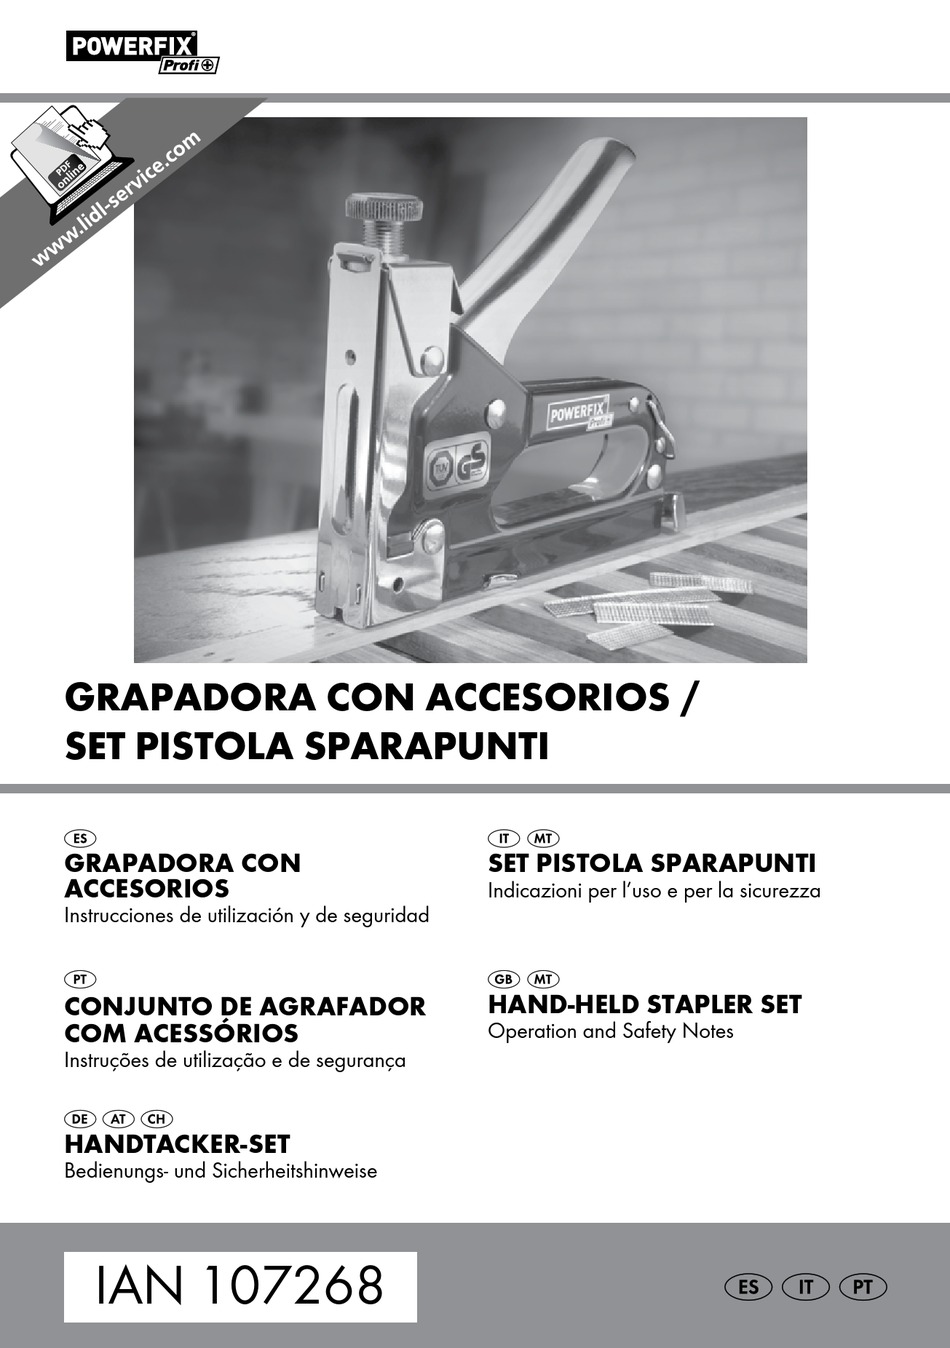 paraguas Tormento Cabina POWERFIX PROFI Z16531 OPERATION AND SAFETY NOTES Pdf Download | ManualsLib